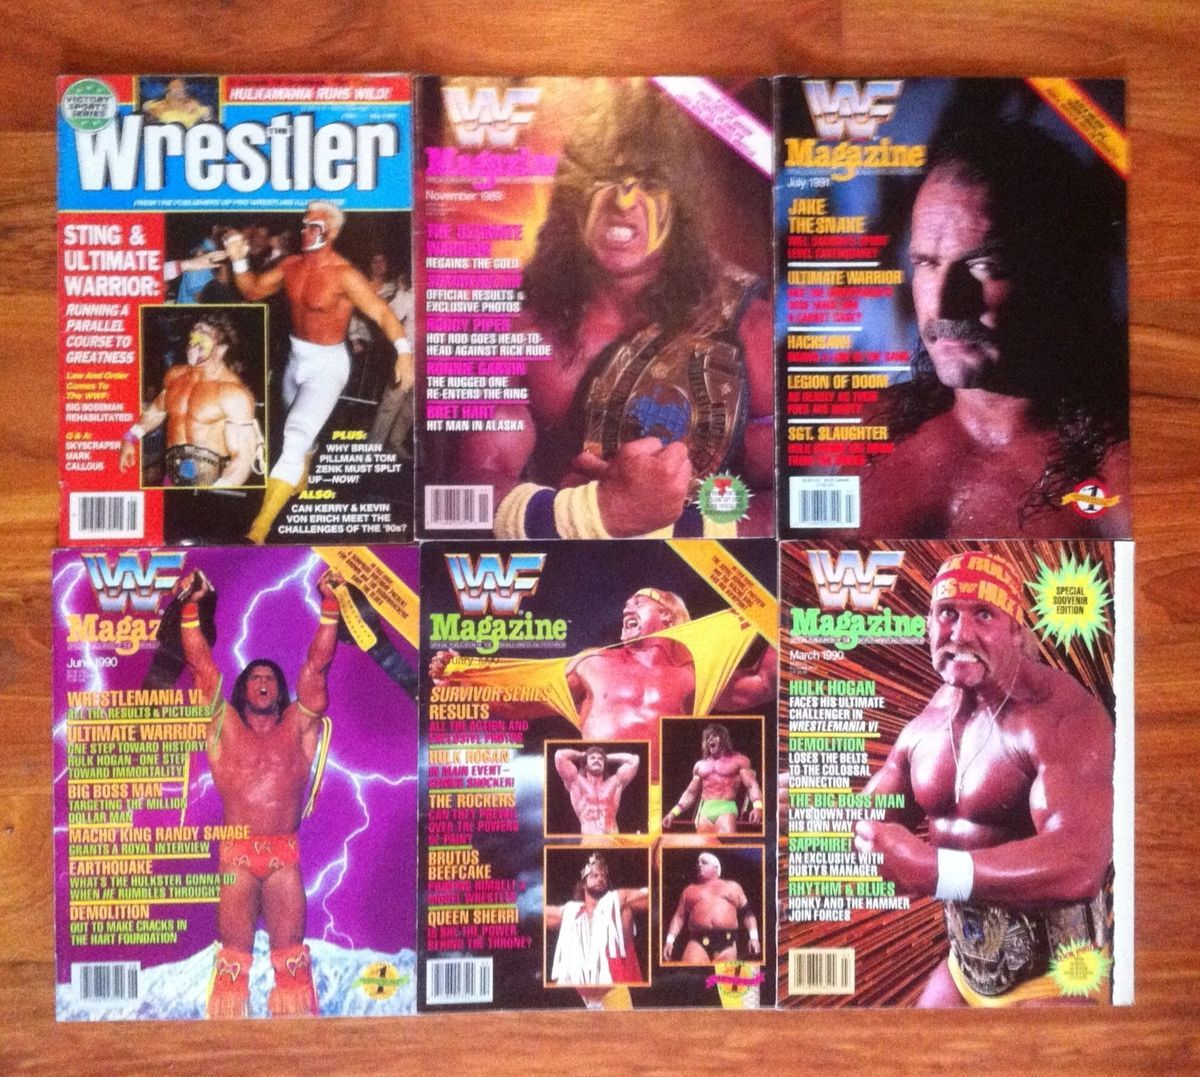   of 6 Wrestling Magazines   The Wrestler & WWF   1980s 90s   Vintage